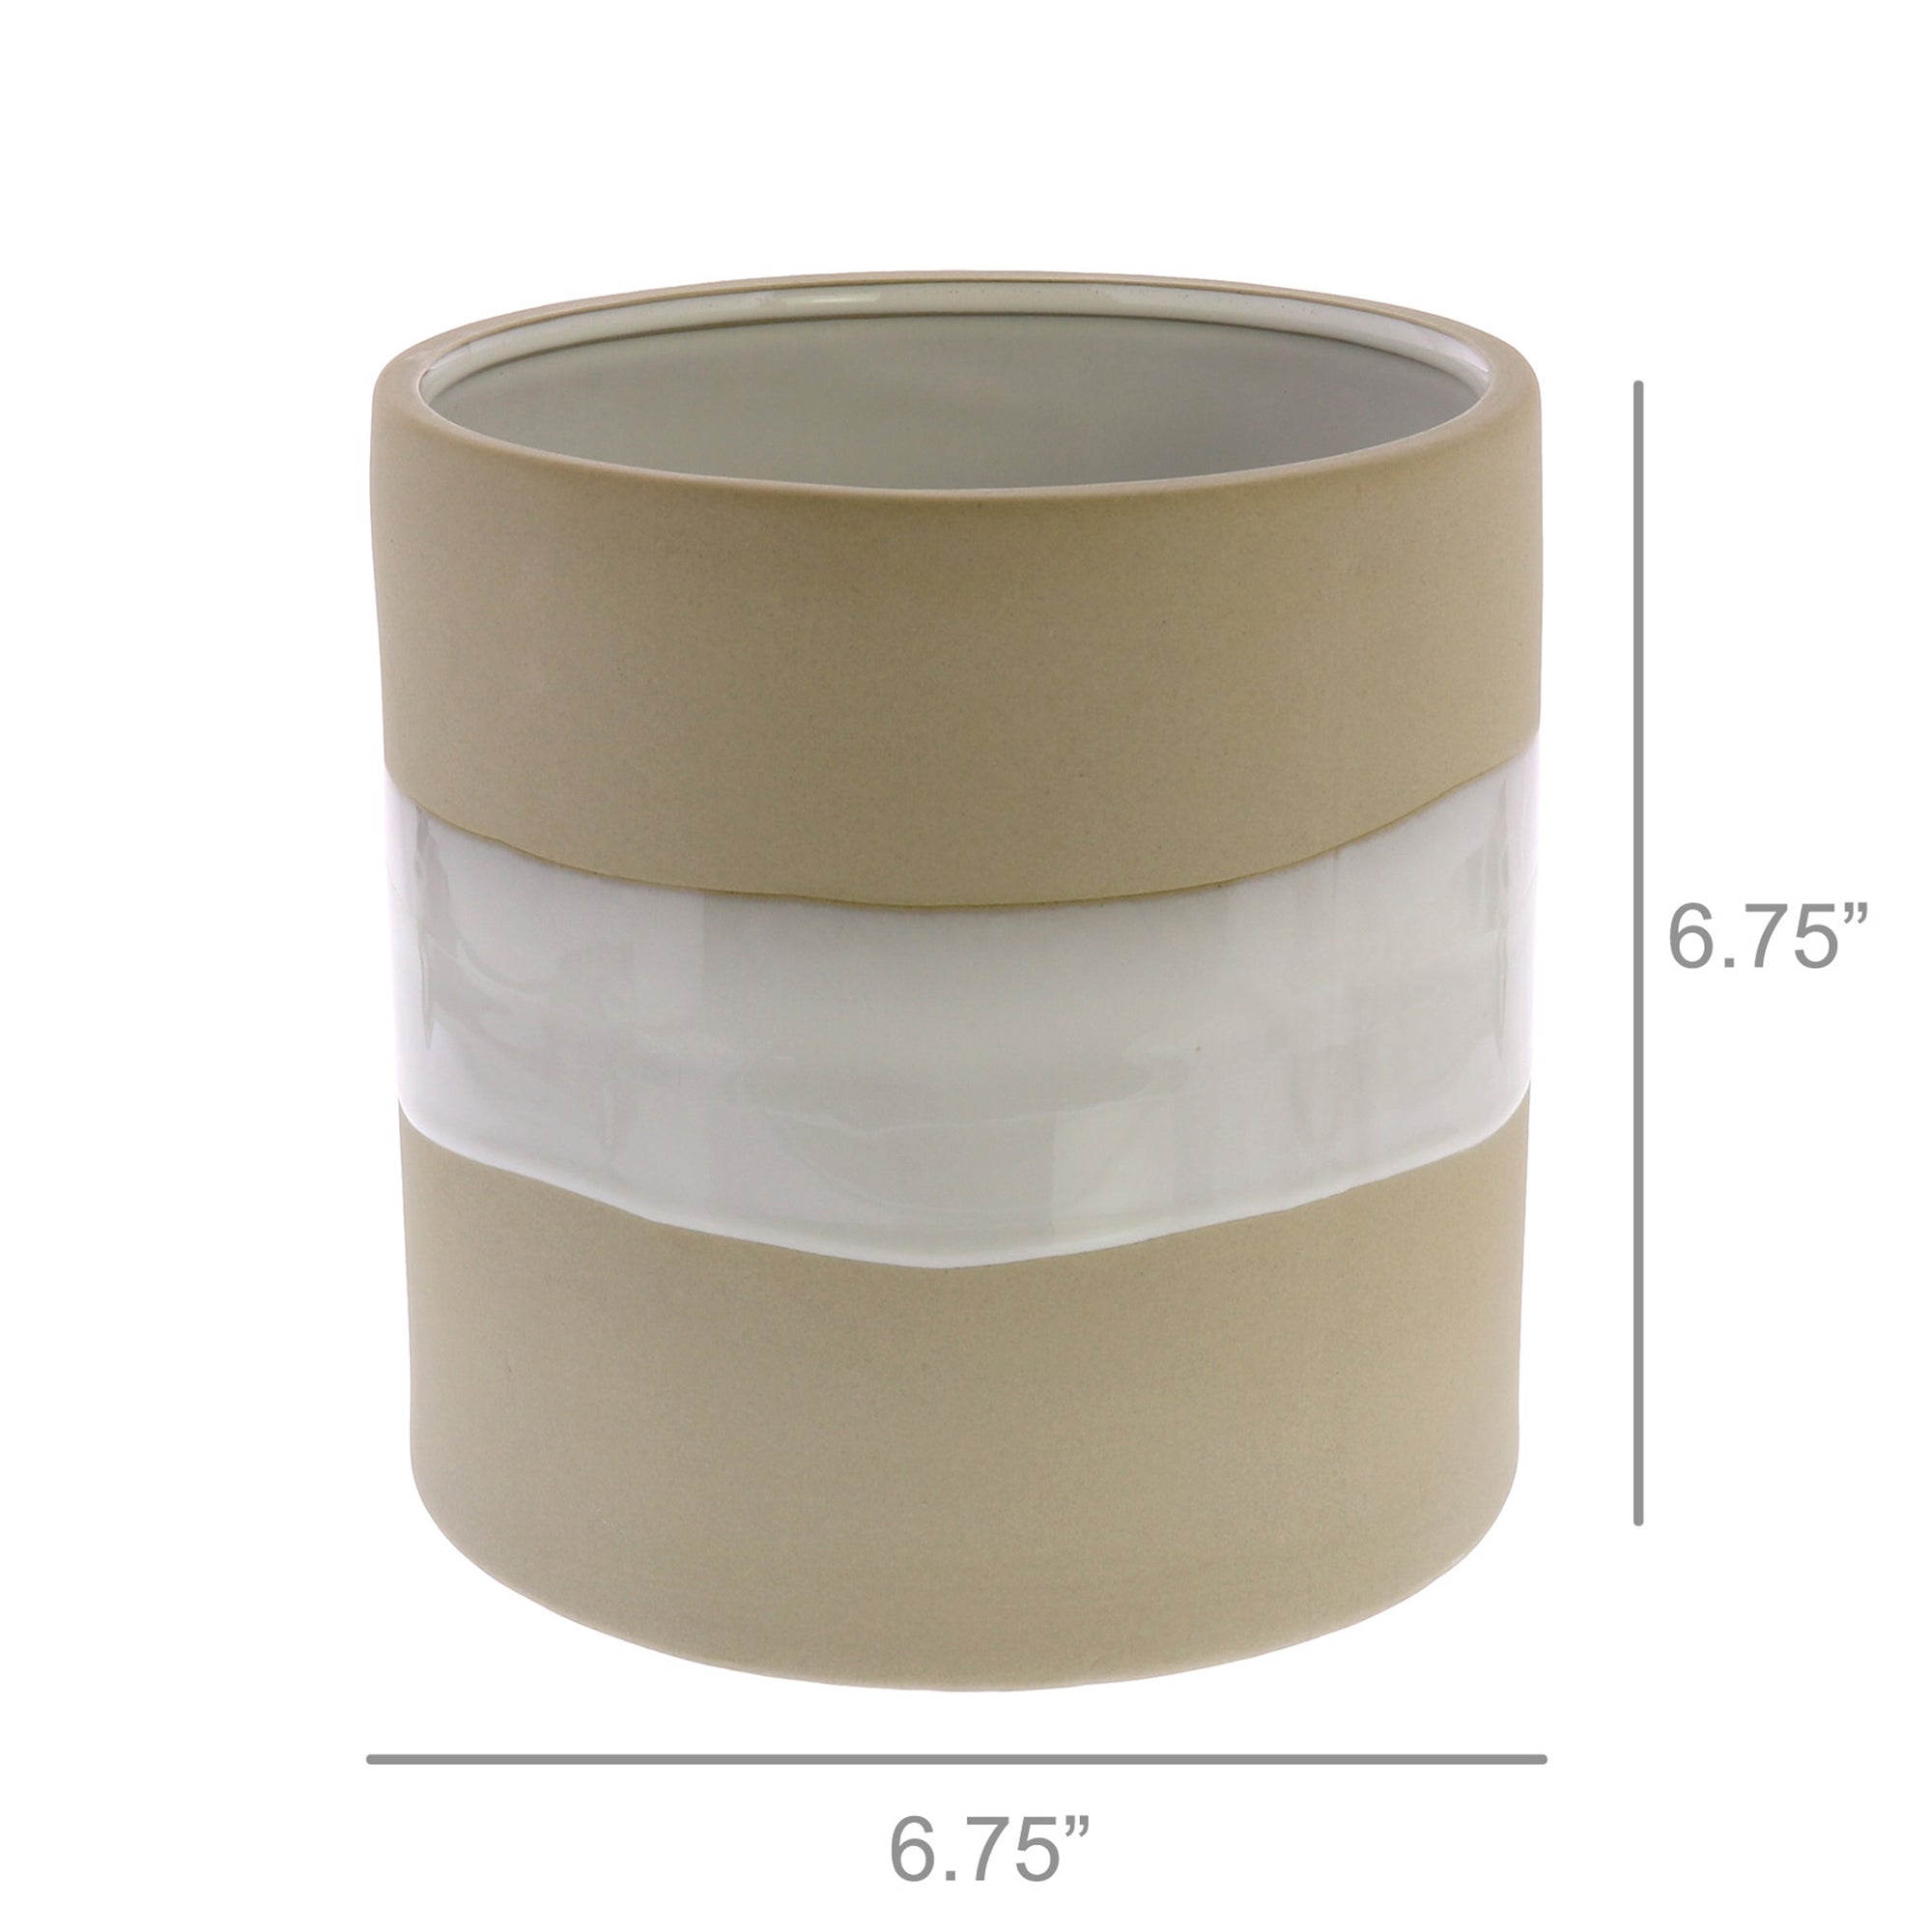 White & Sand Ceramic Low Vase (2 Sizes)